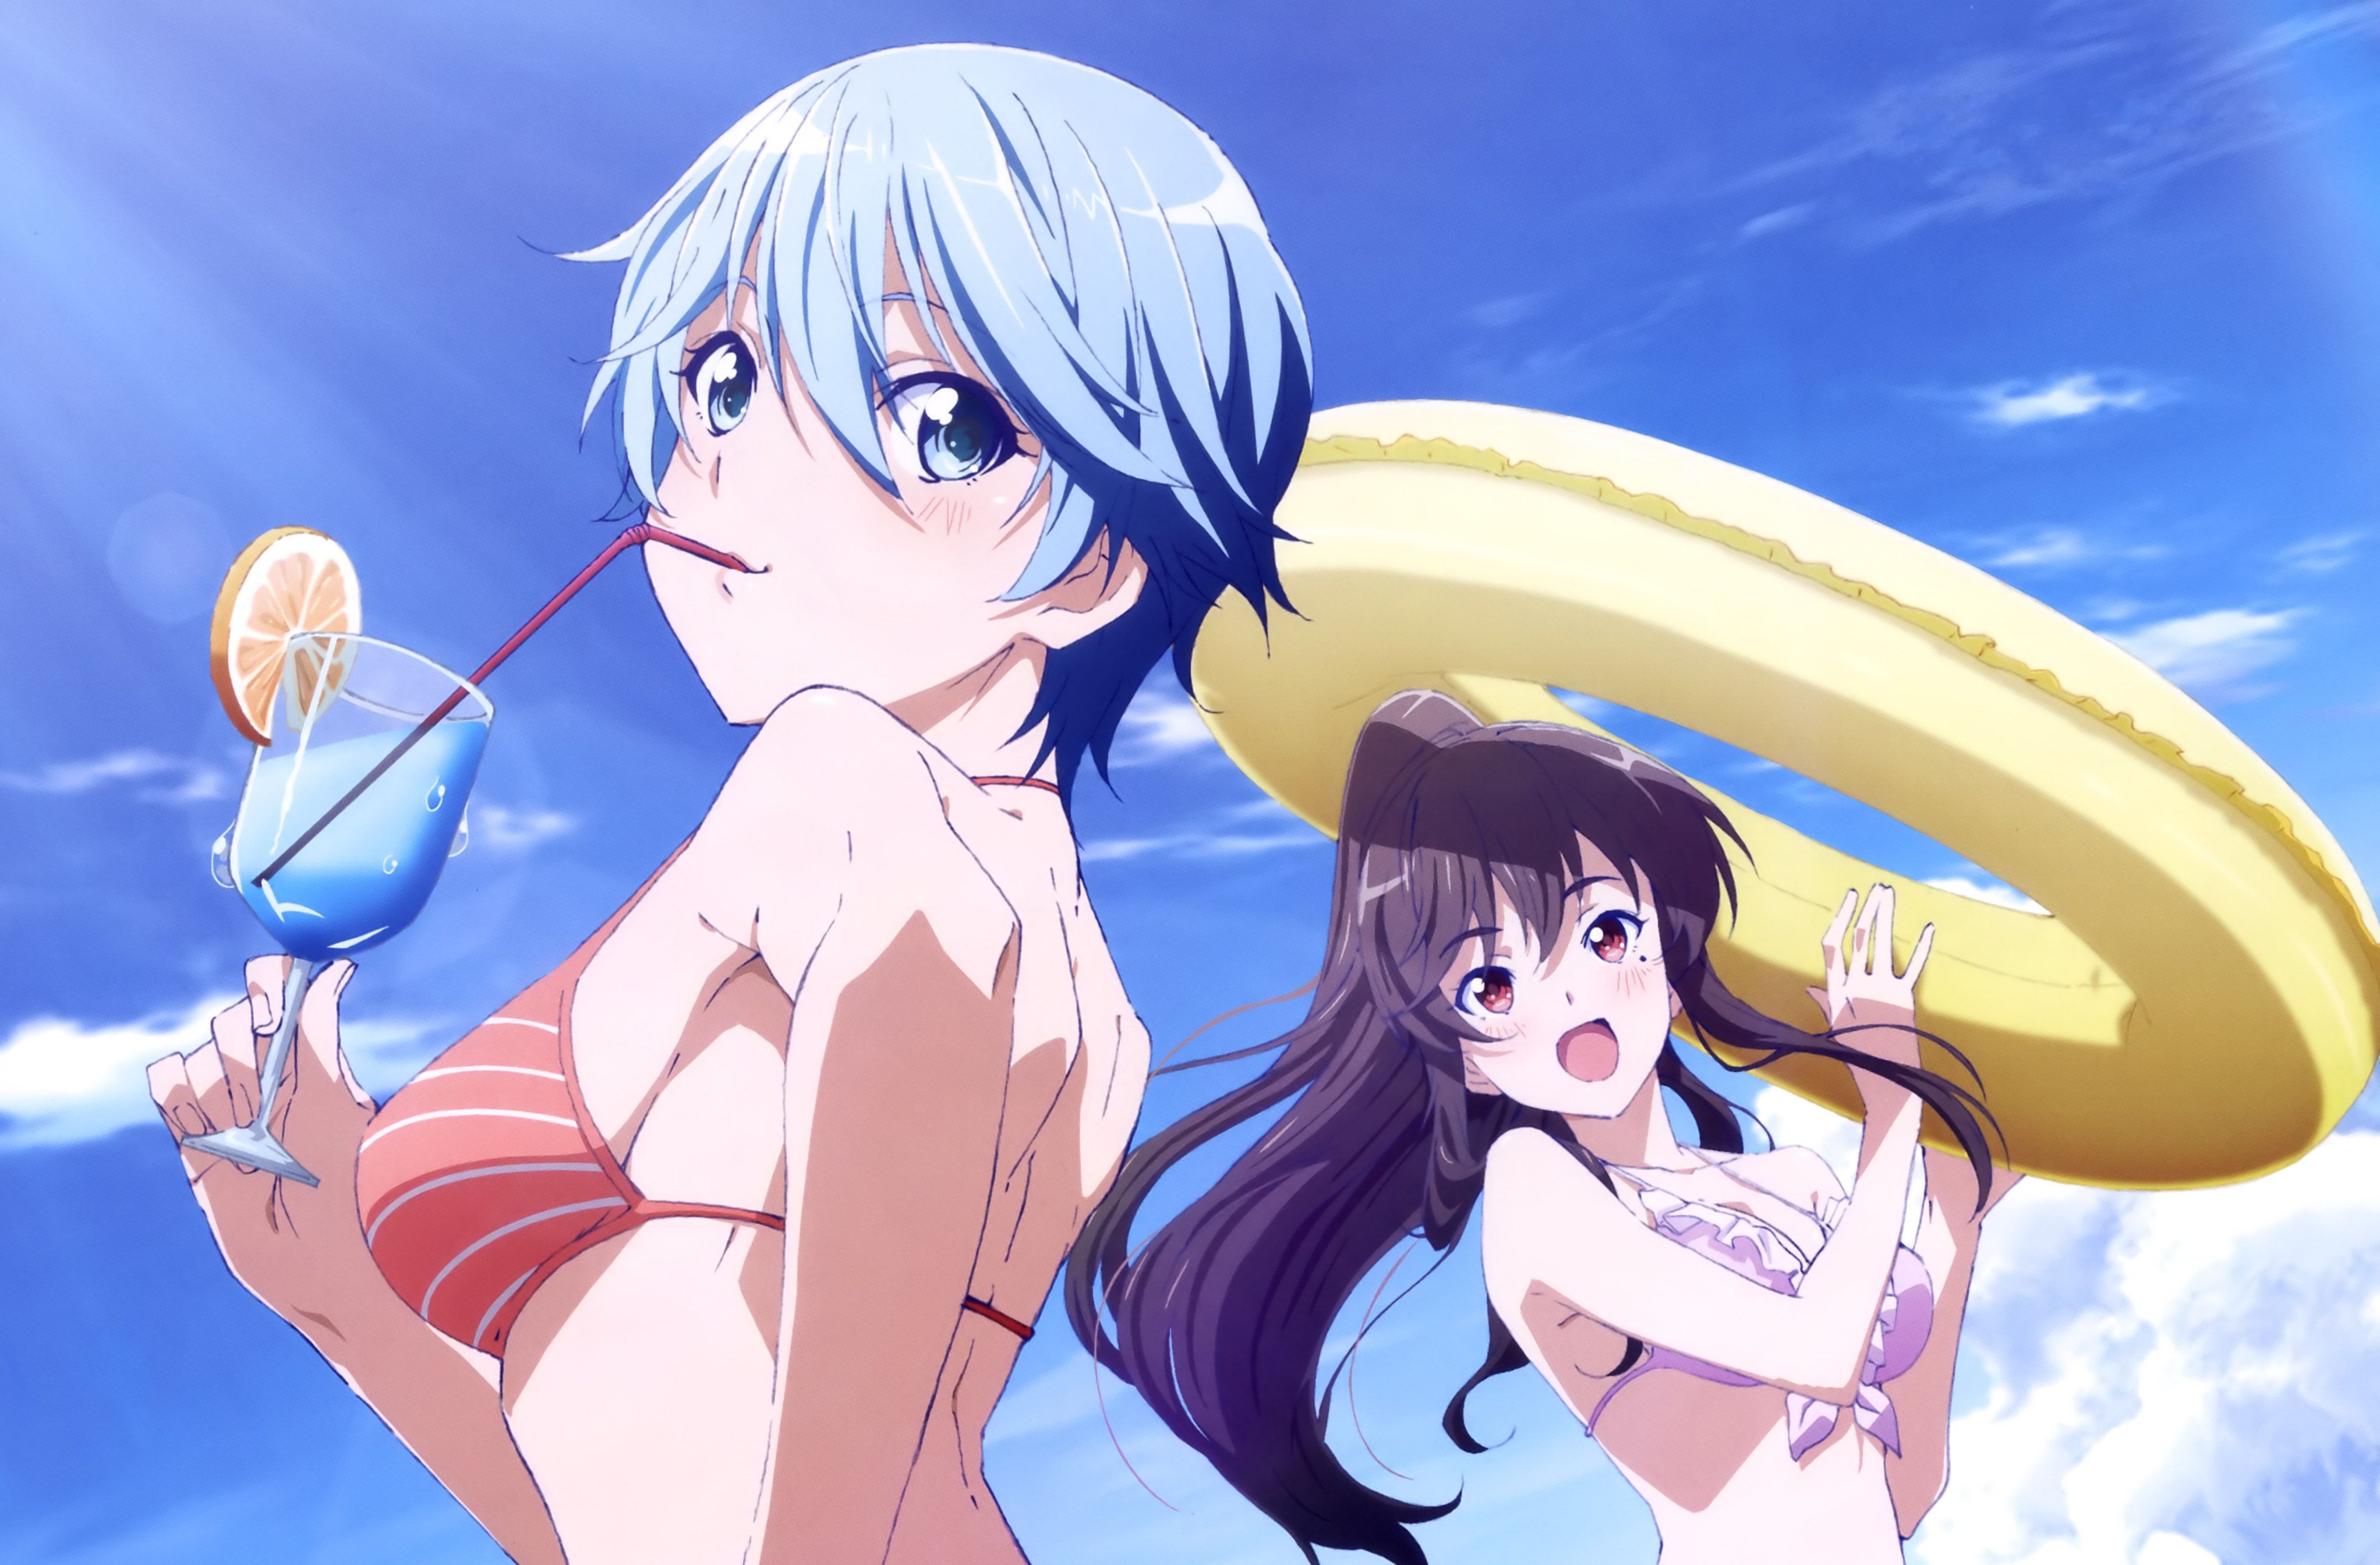 812107 Bild herunterladen animes, fuuka, fuuka akitsuki, koyuki hinashi - Hintergrundbilder und Bildschirmschoner kostenlos